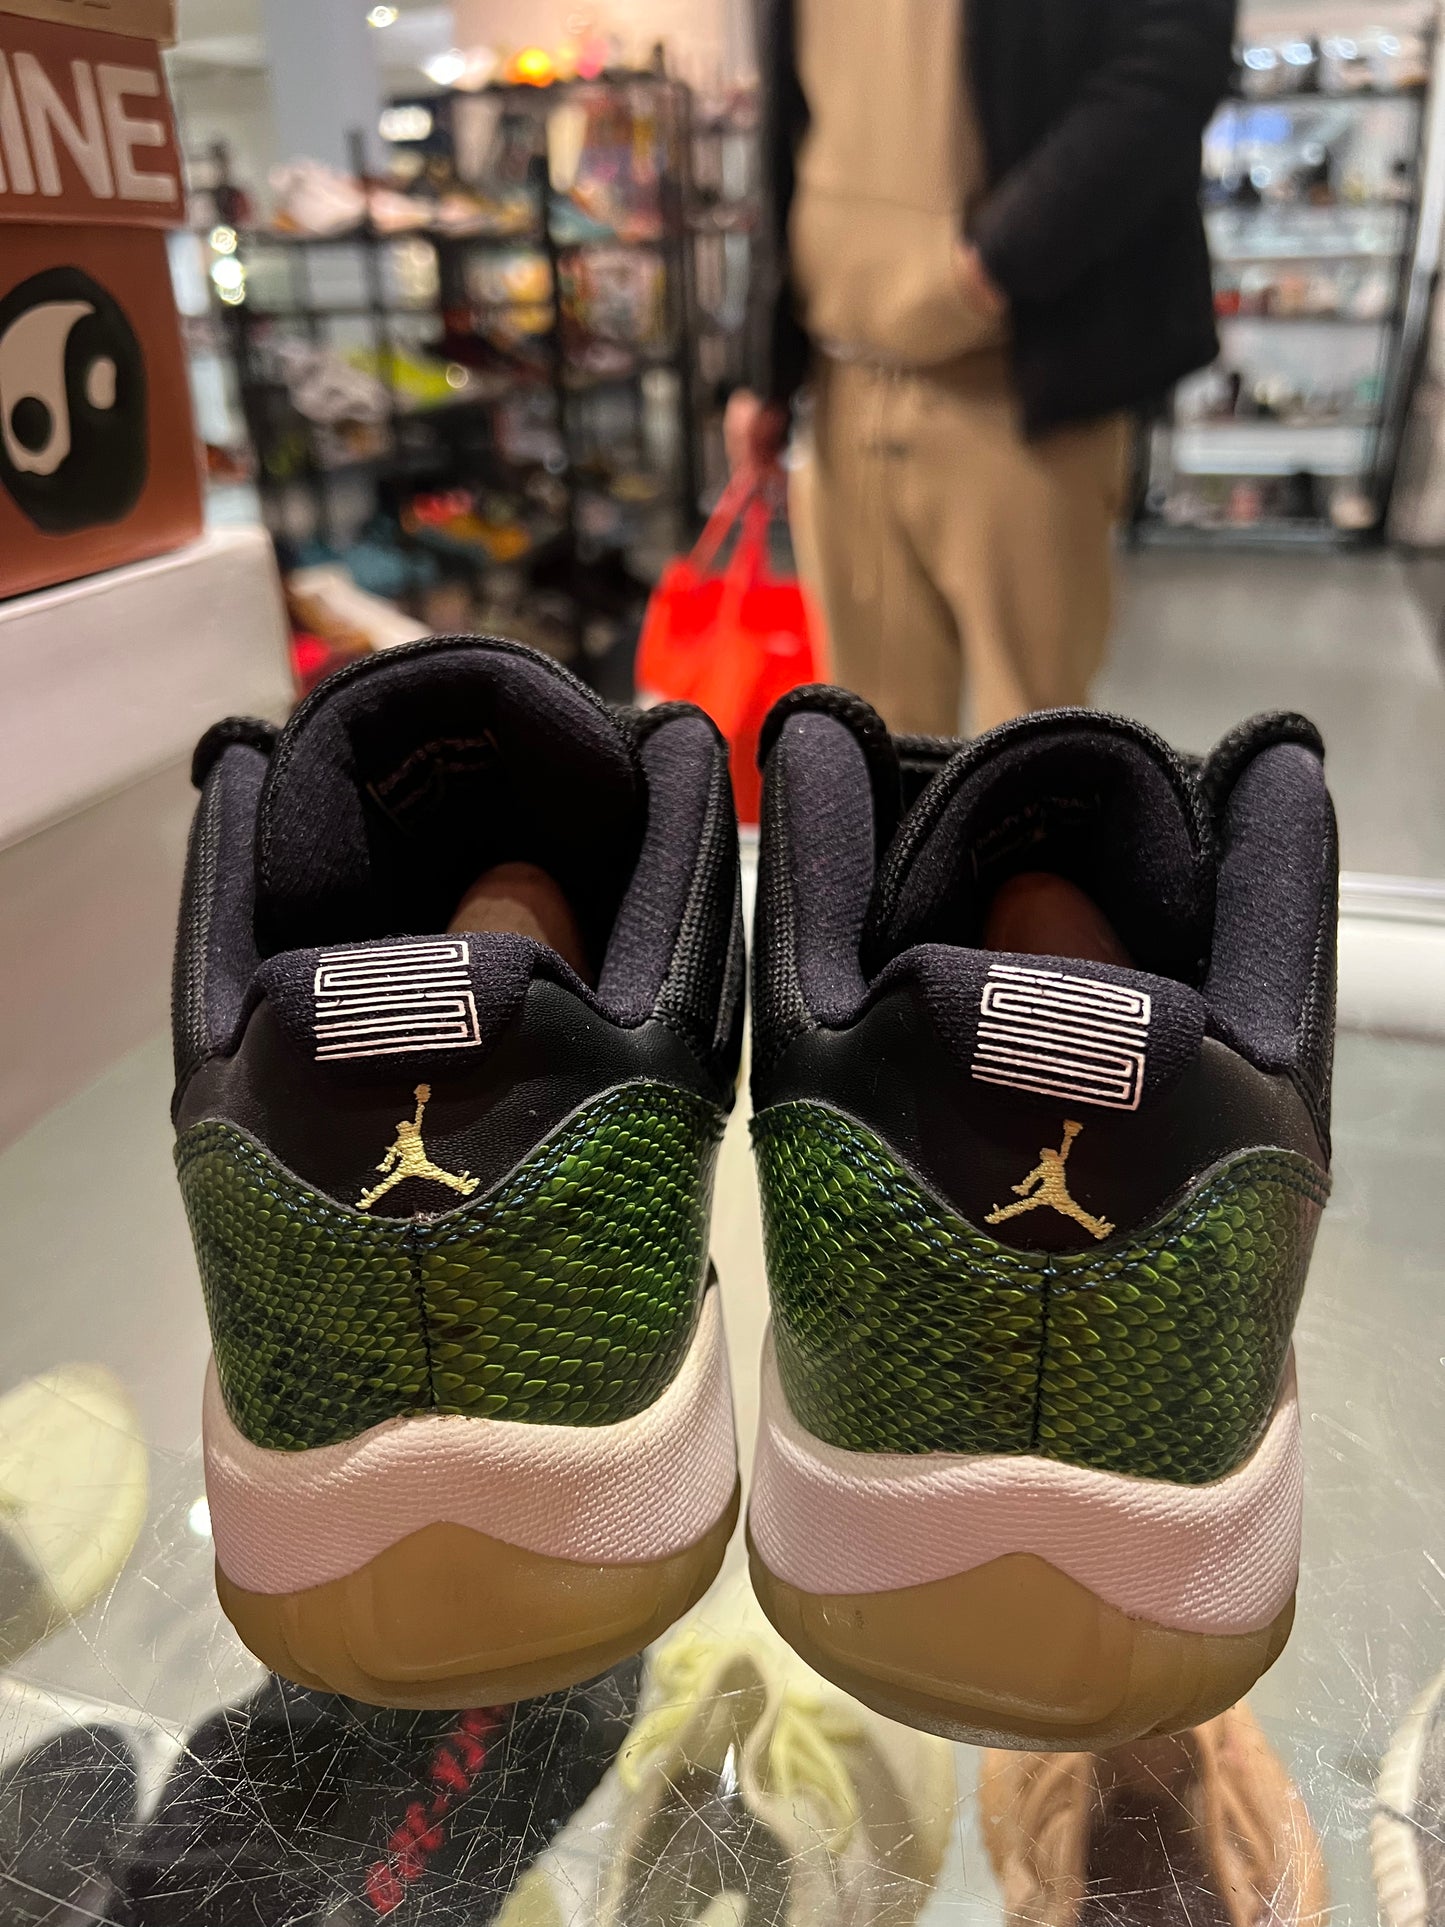 Size 9 Air Jordan 11 Low “Green Snakeskin” (Mall)